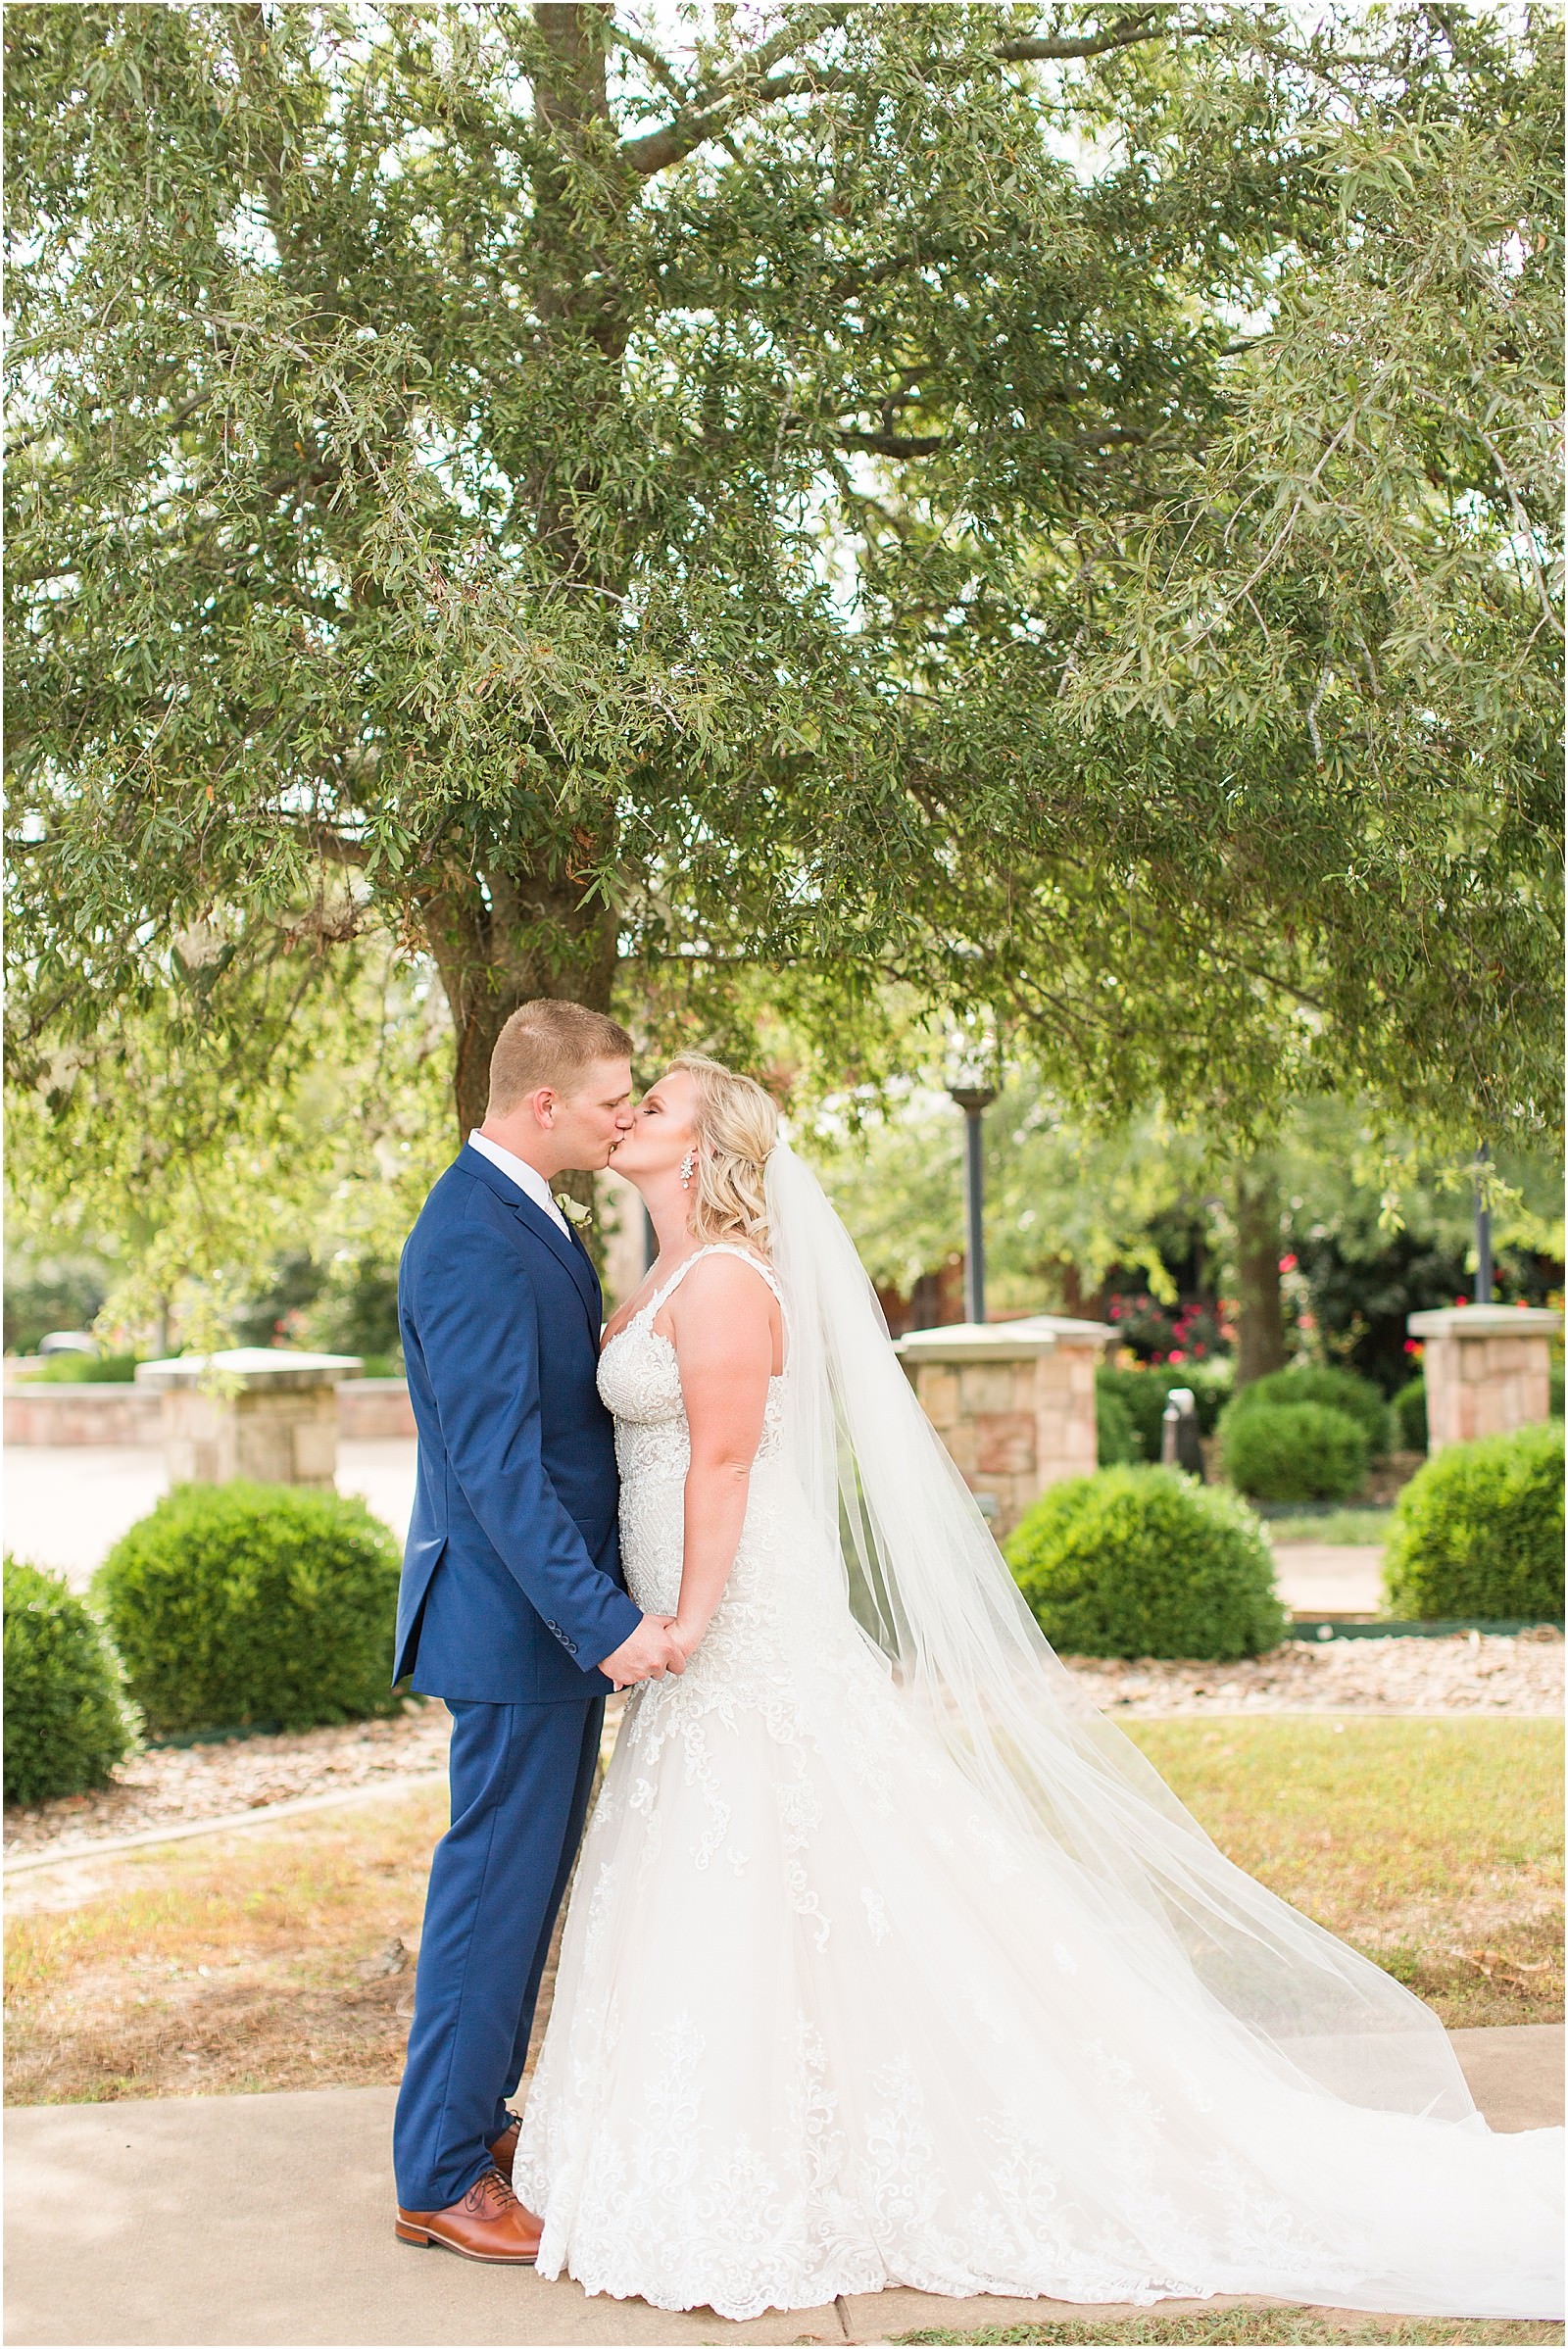 Kelsey and Caleb | Walkers Bluff Winery Wedding | Bret and Brandie Photography037.jpg